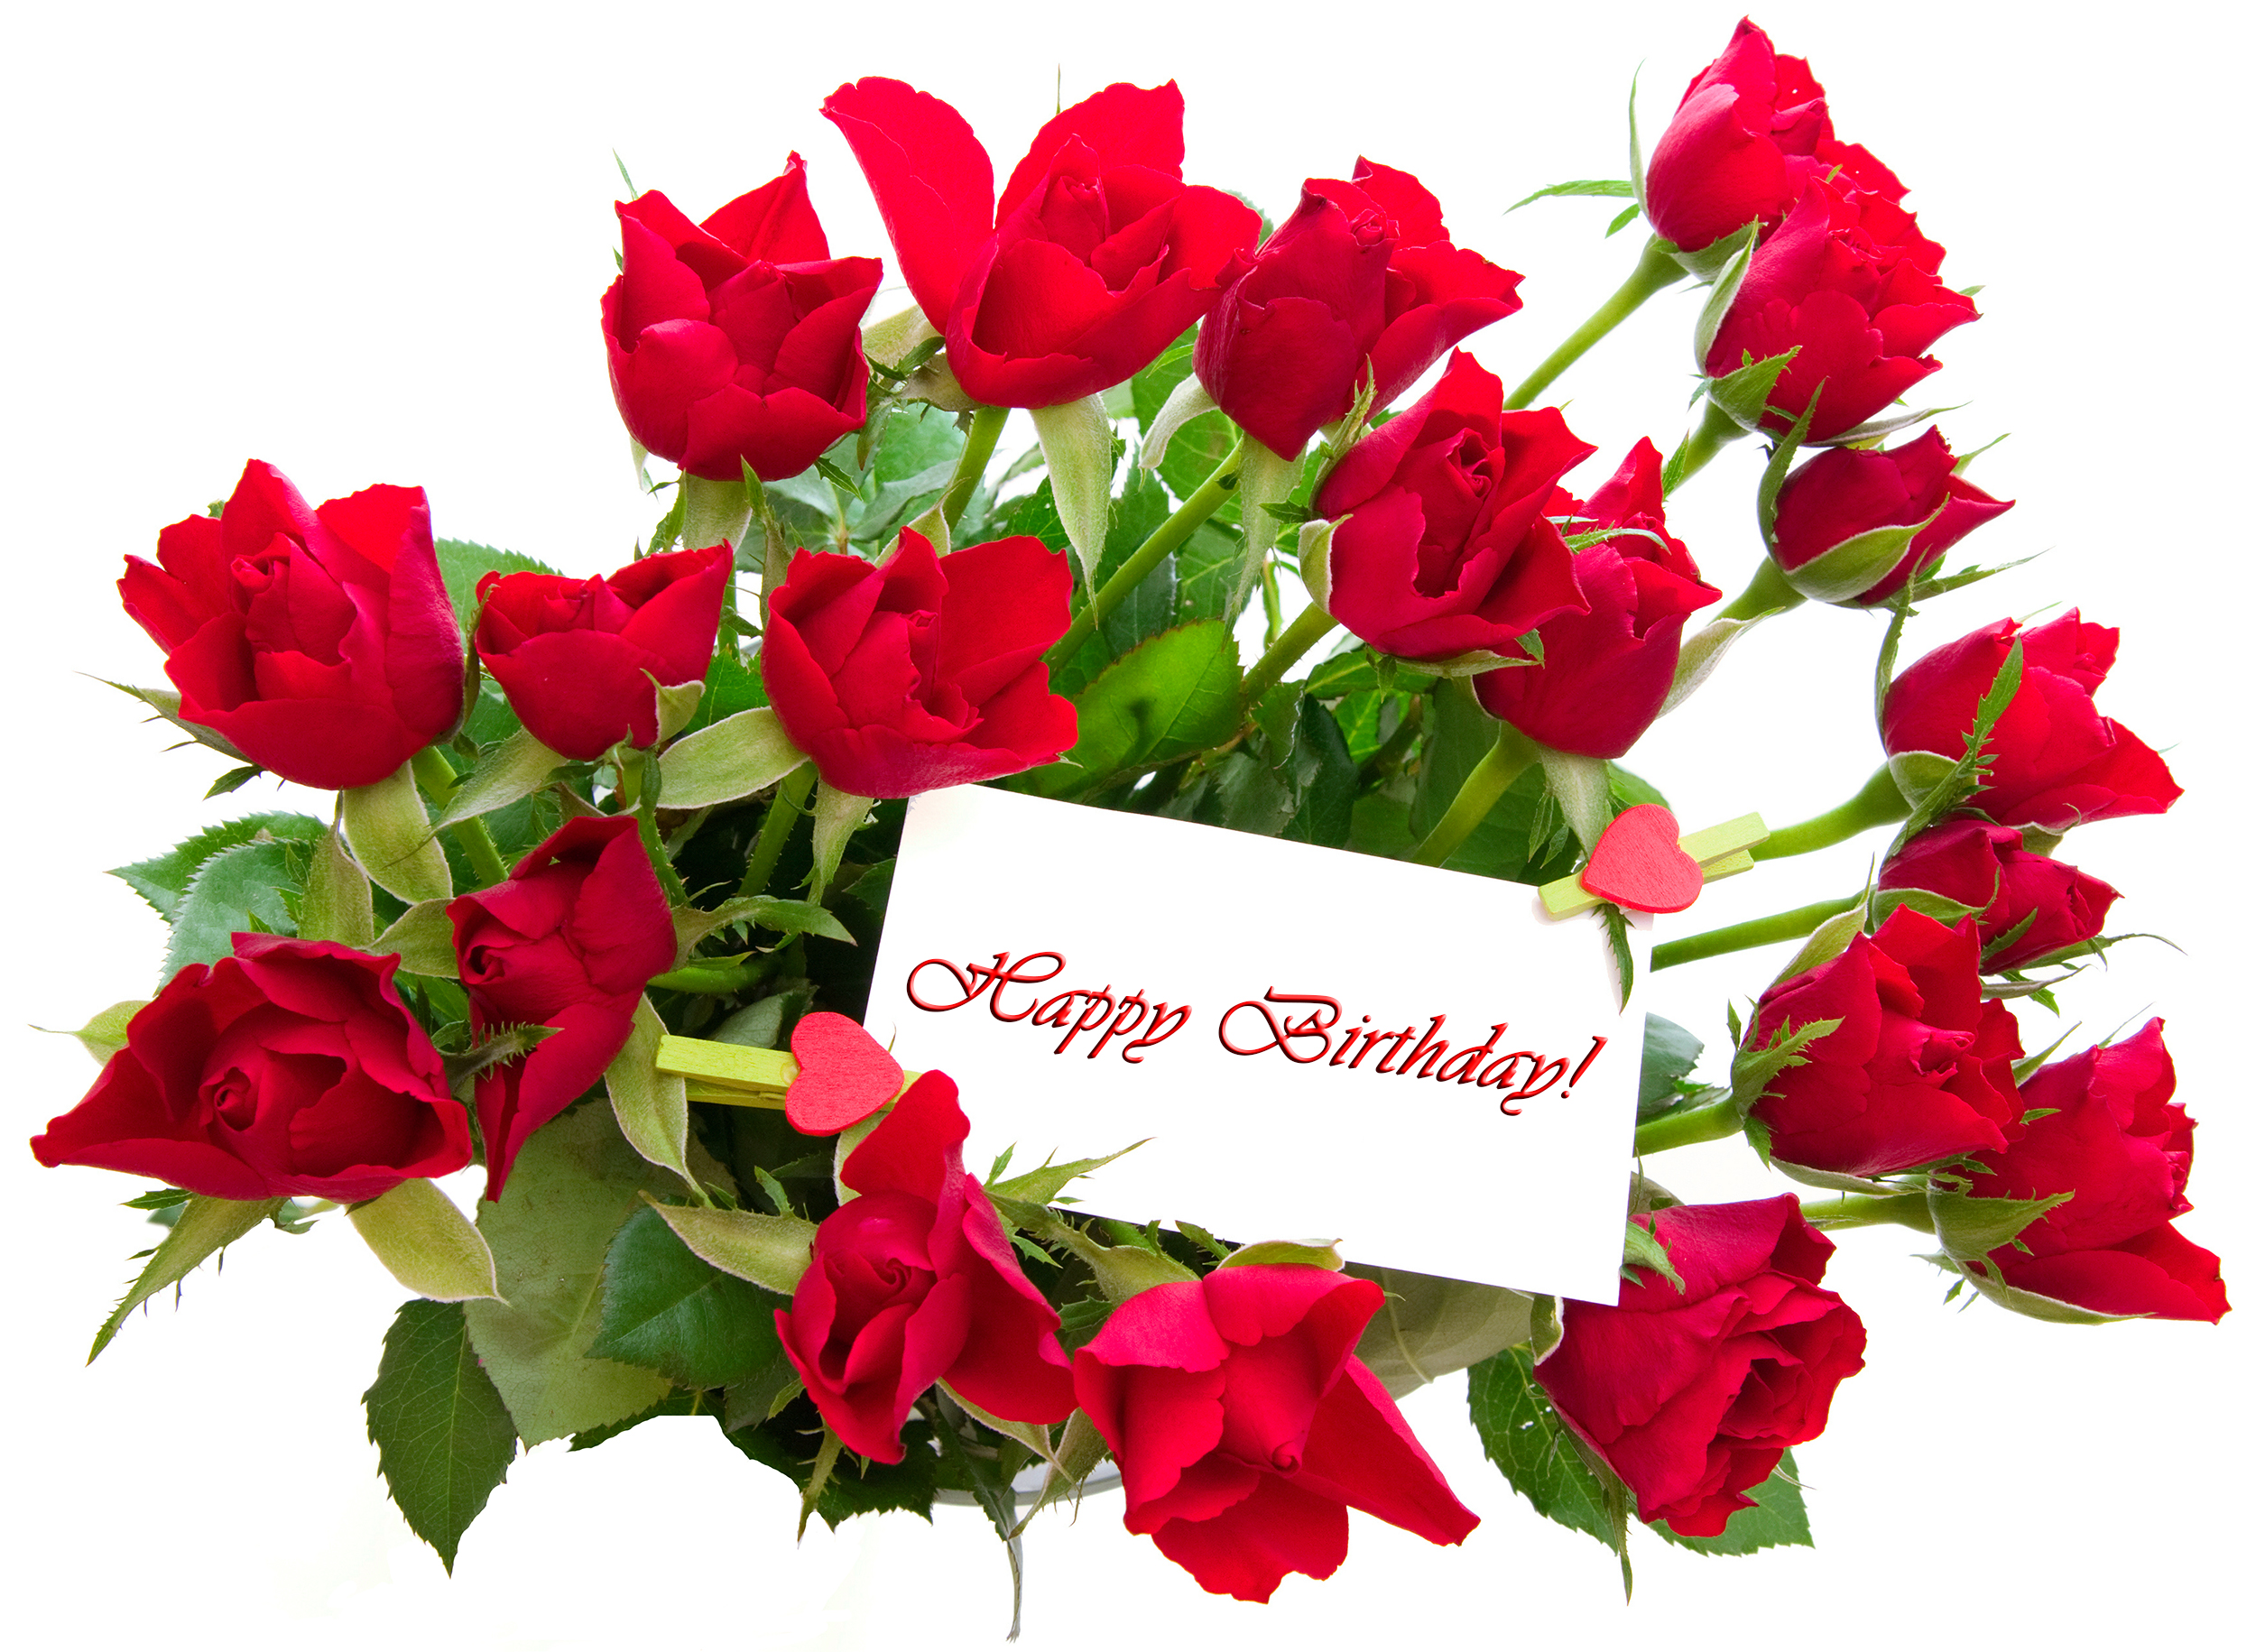 happy birthday red roses